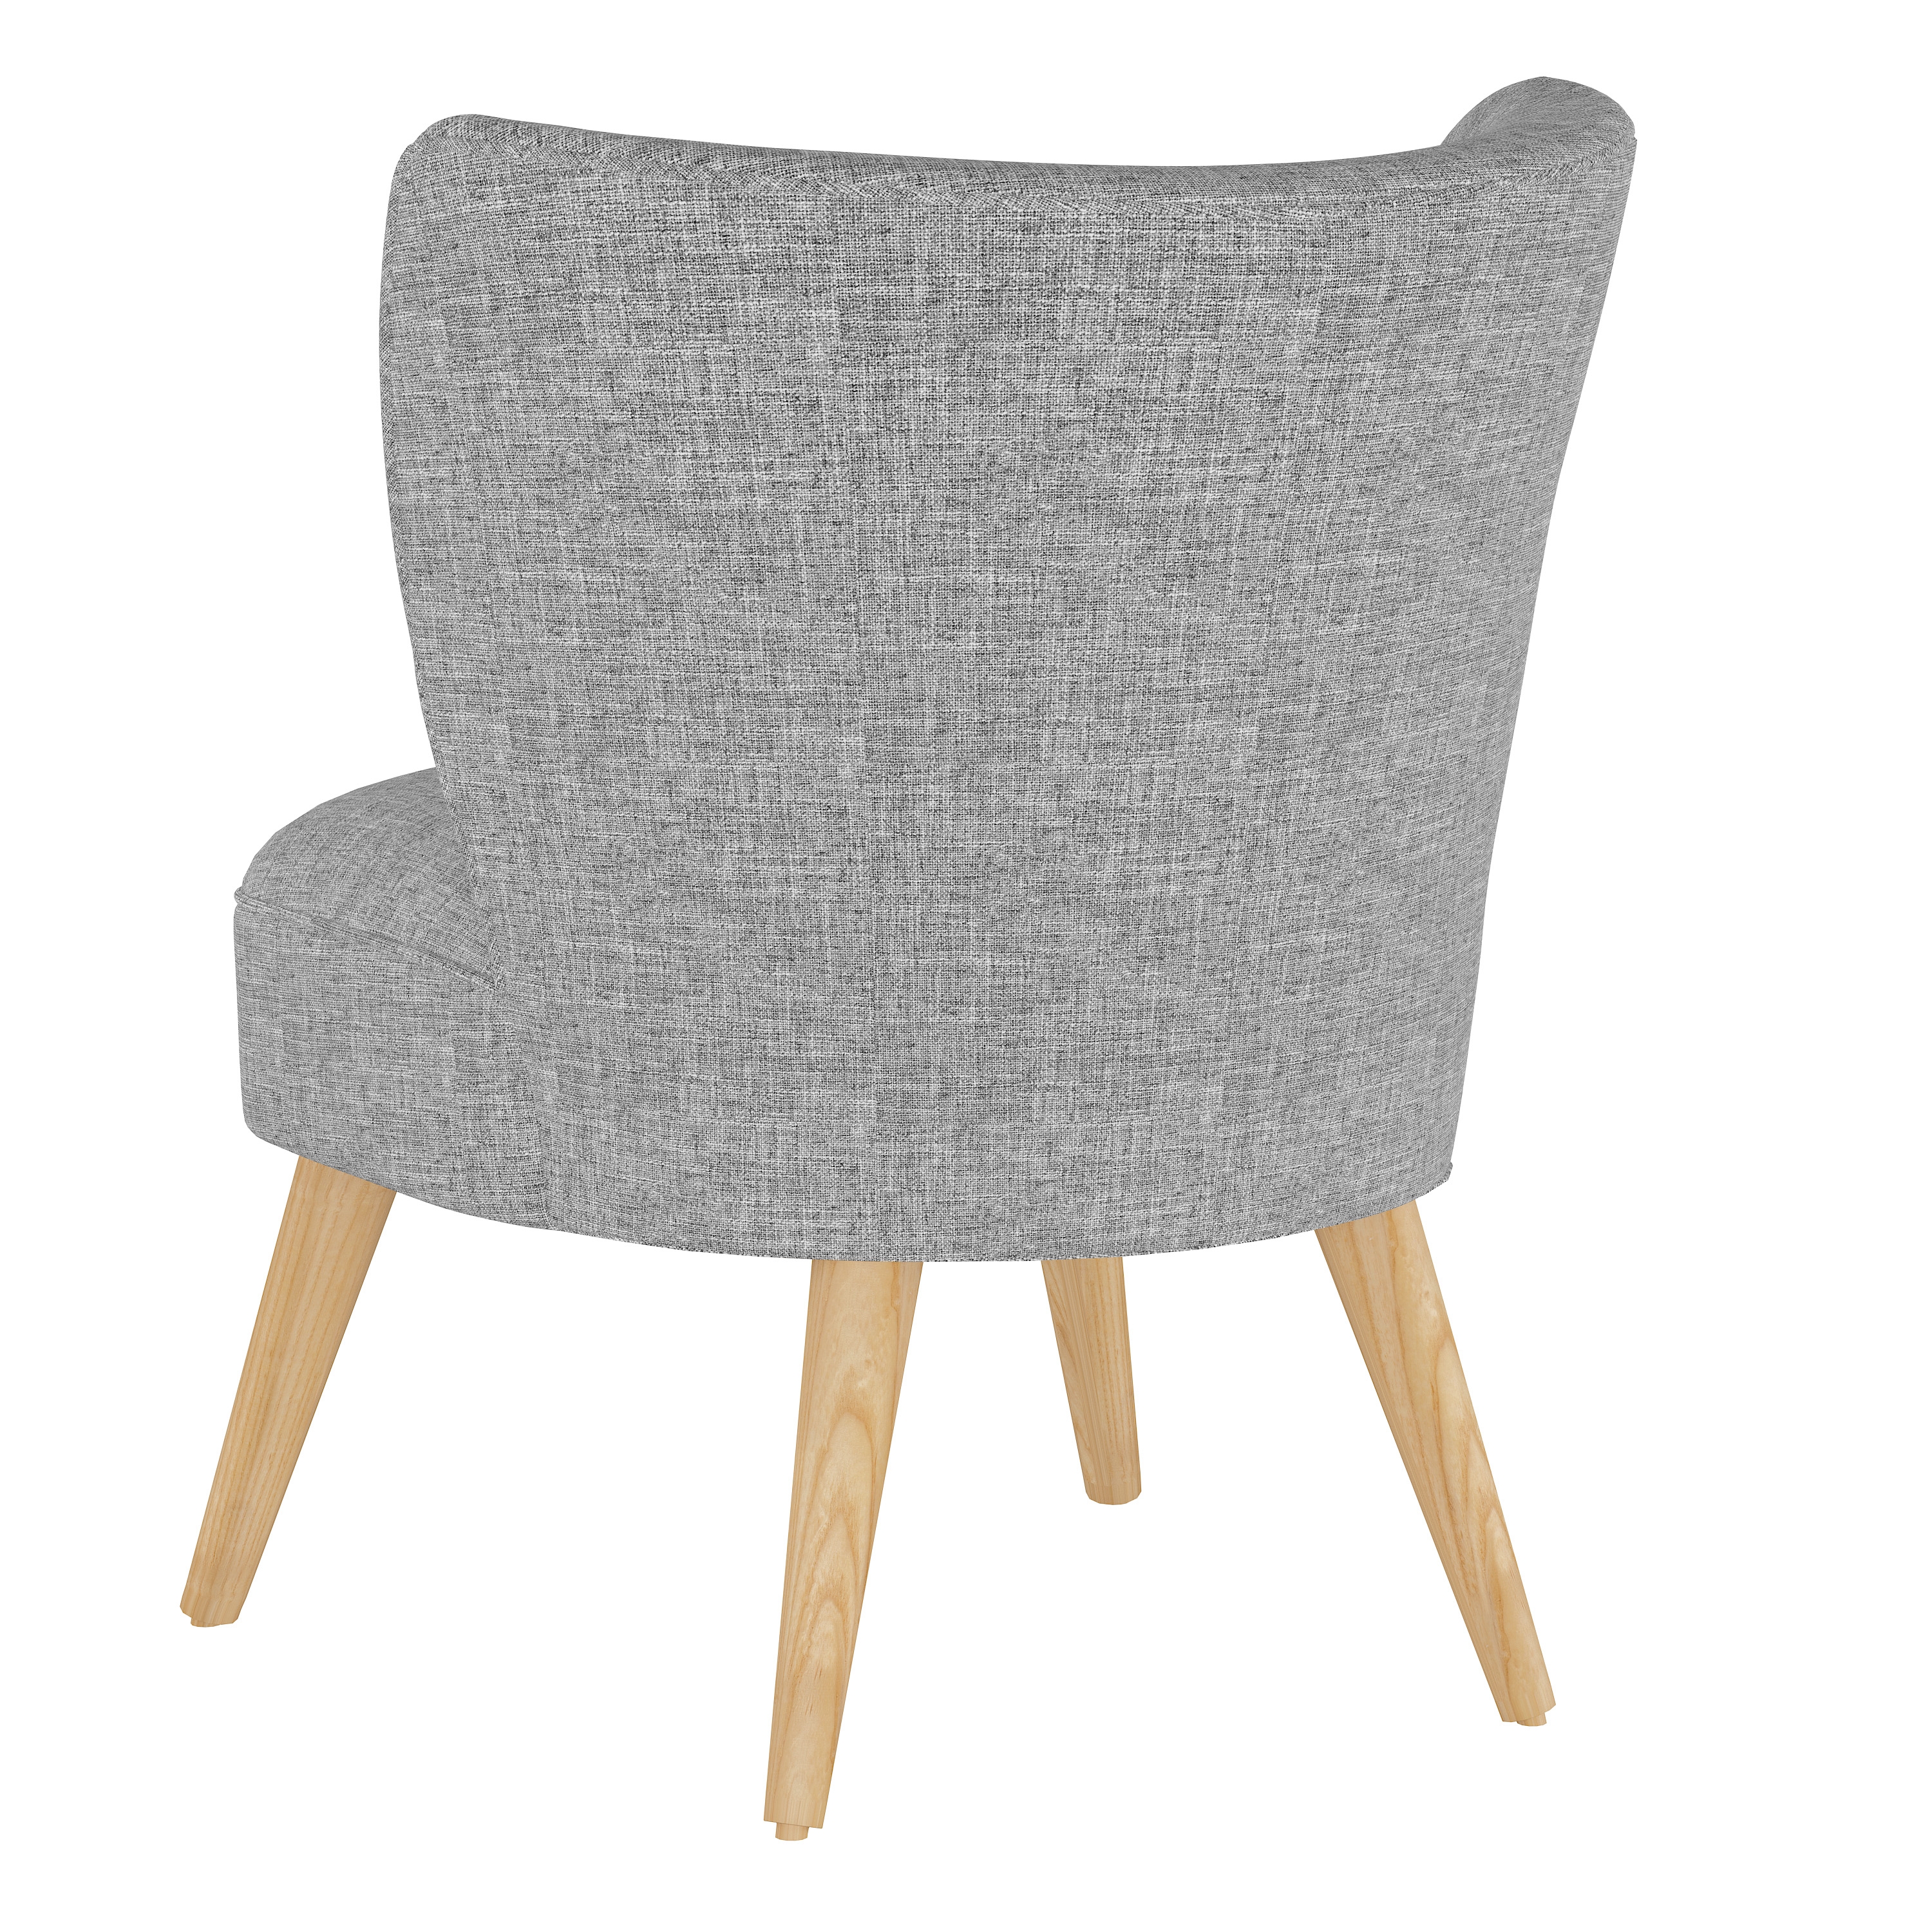 Altgeld Chair - Image 2